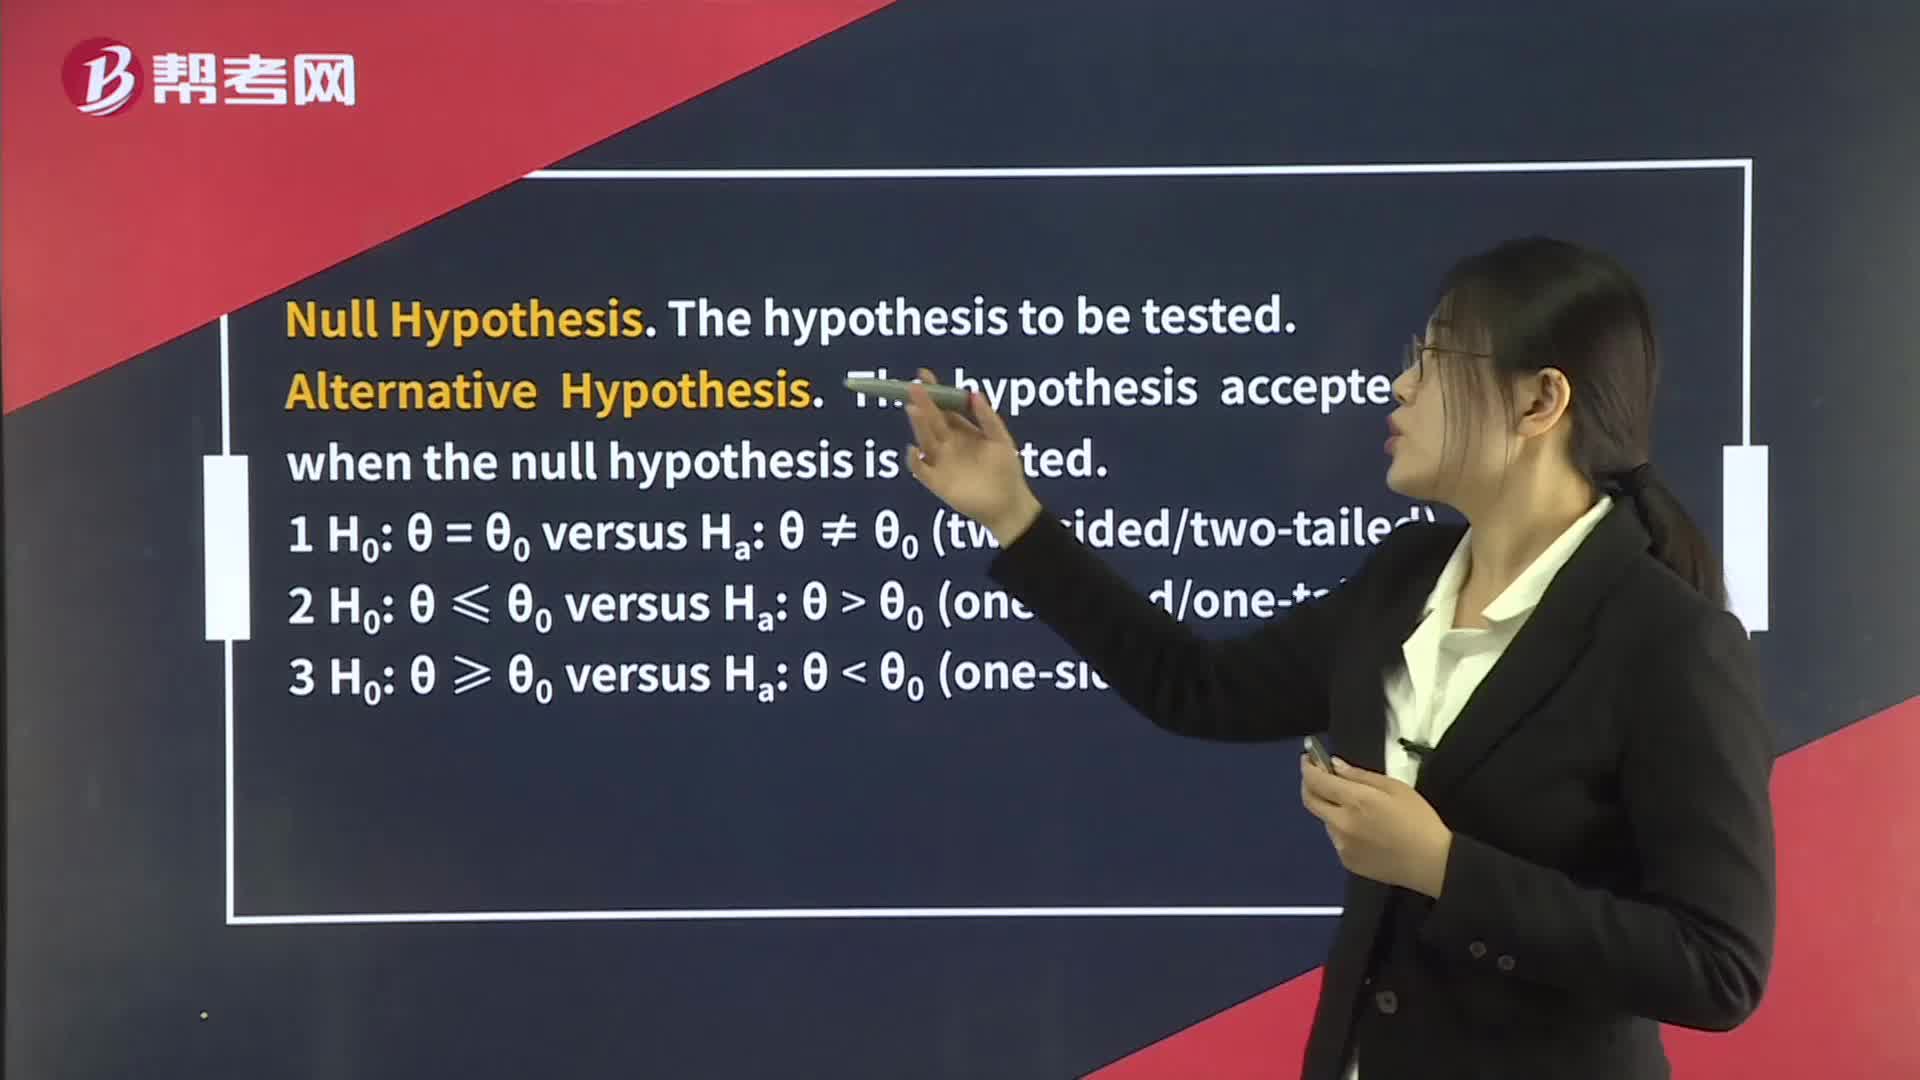 Definition of Alternative Hypothesis